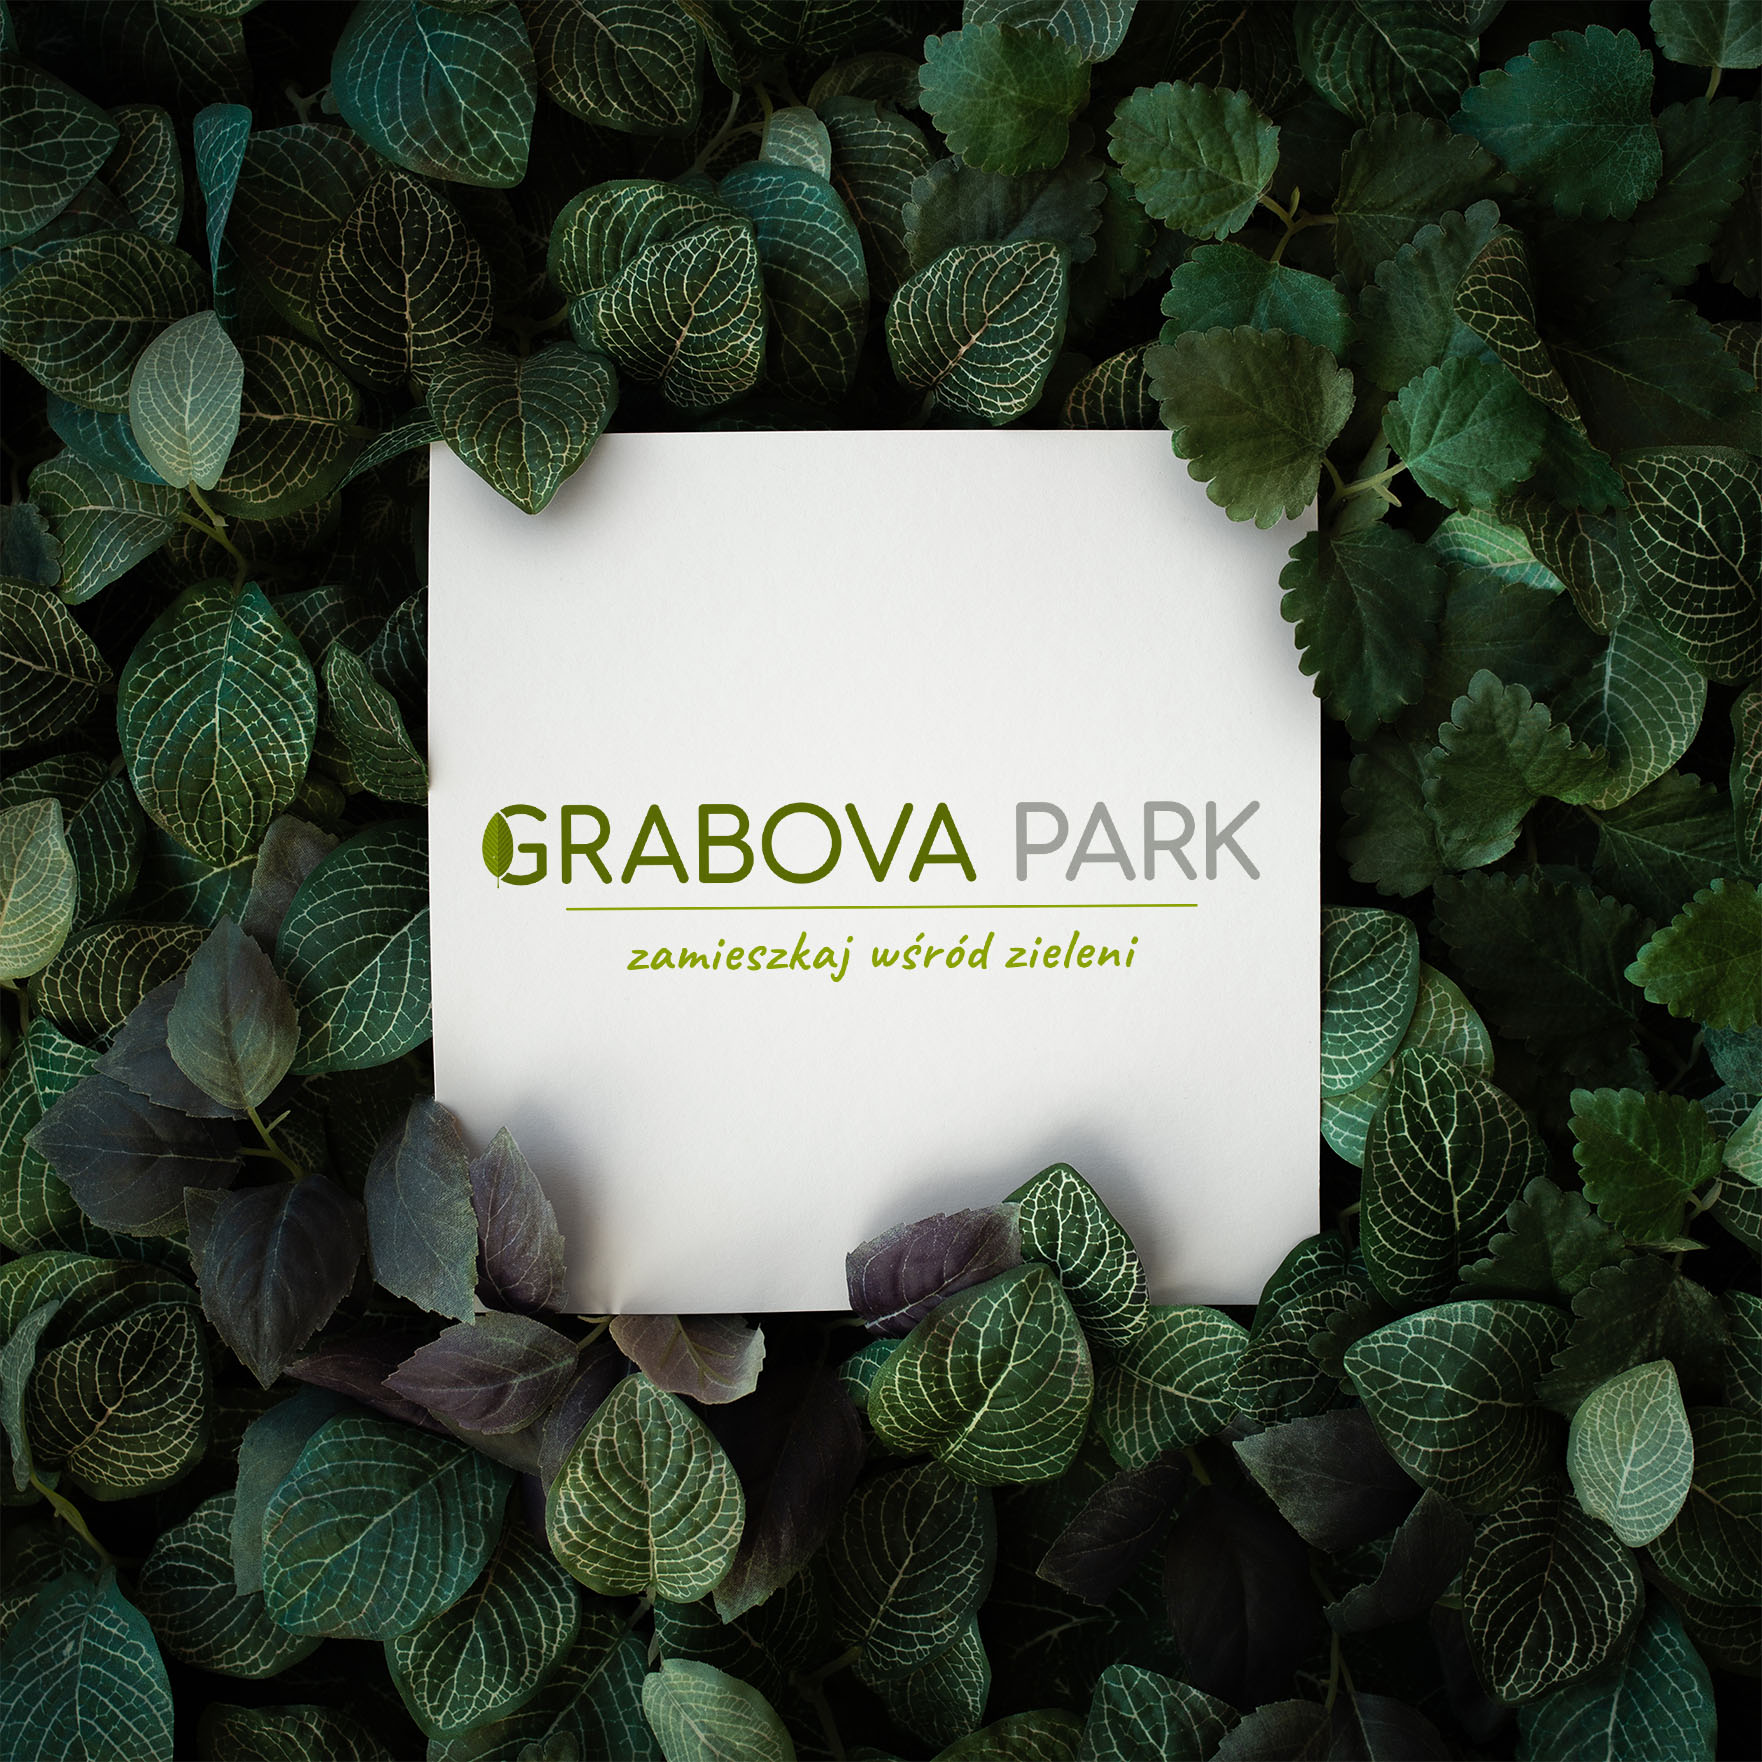 Grabova Park